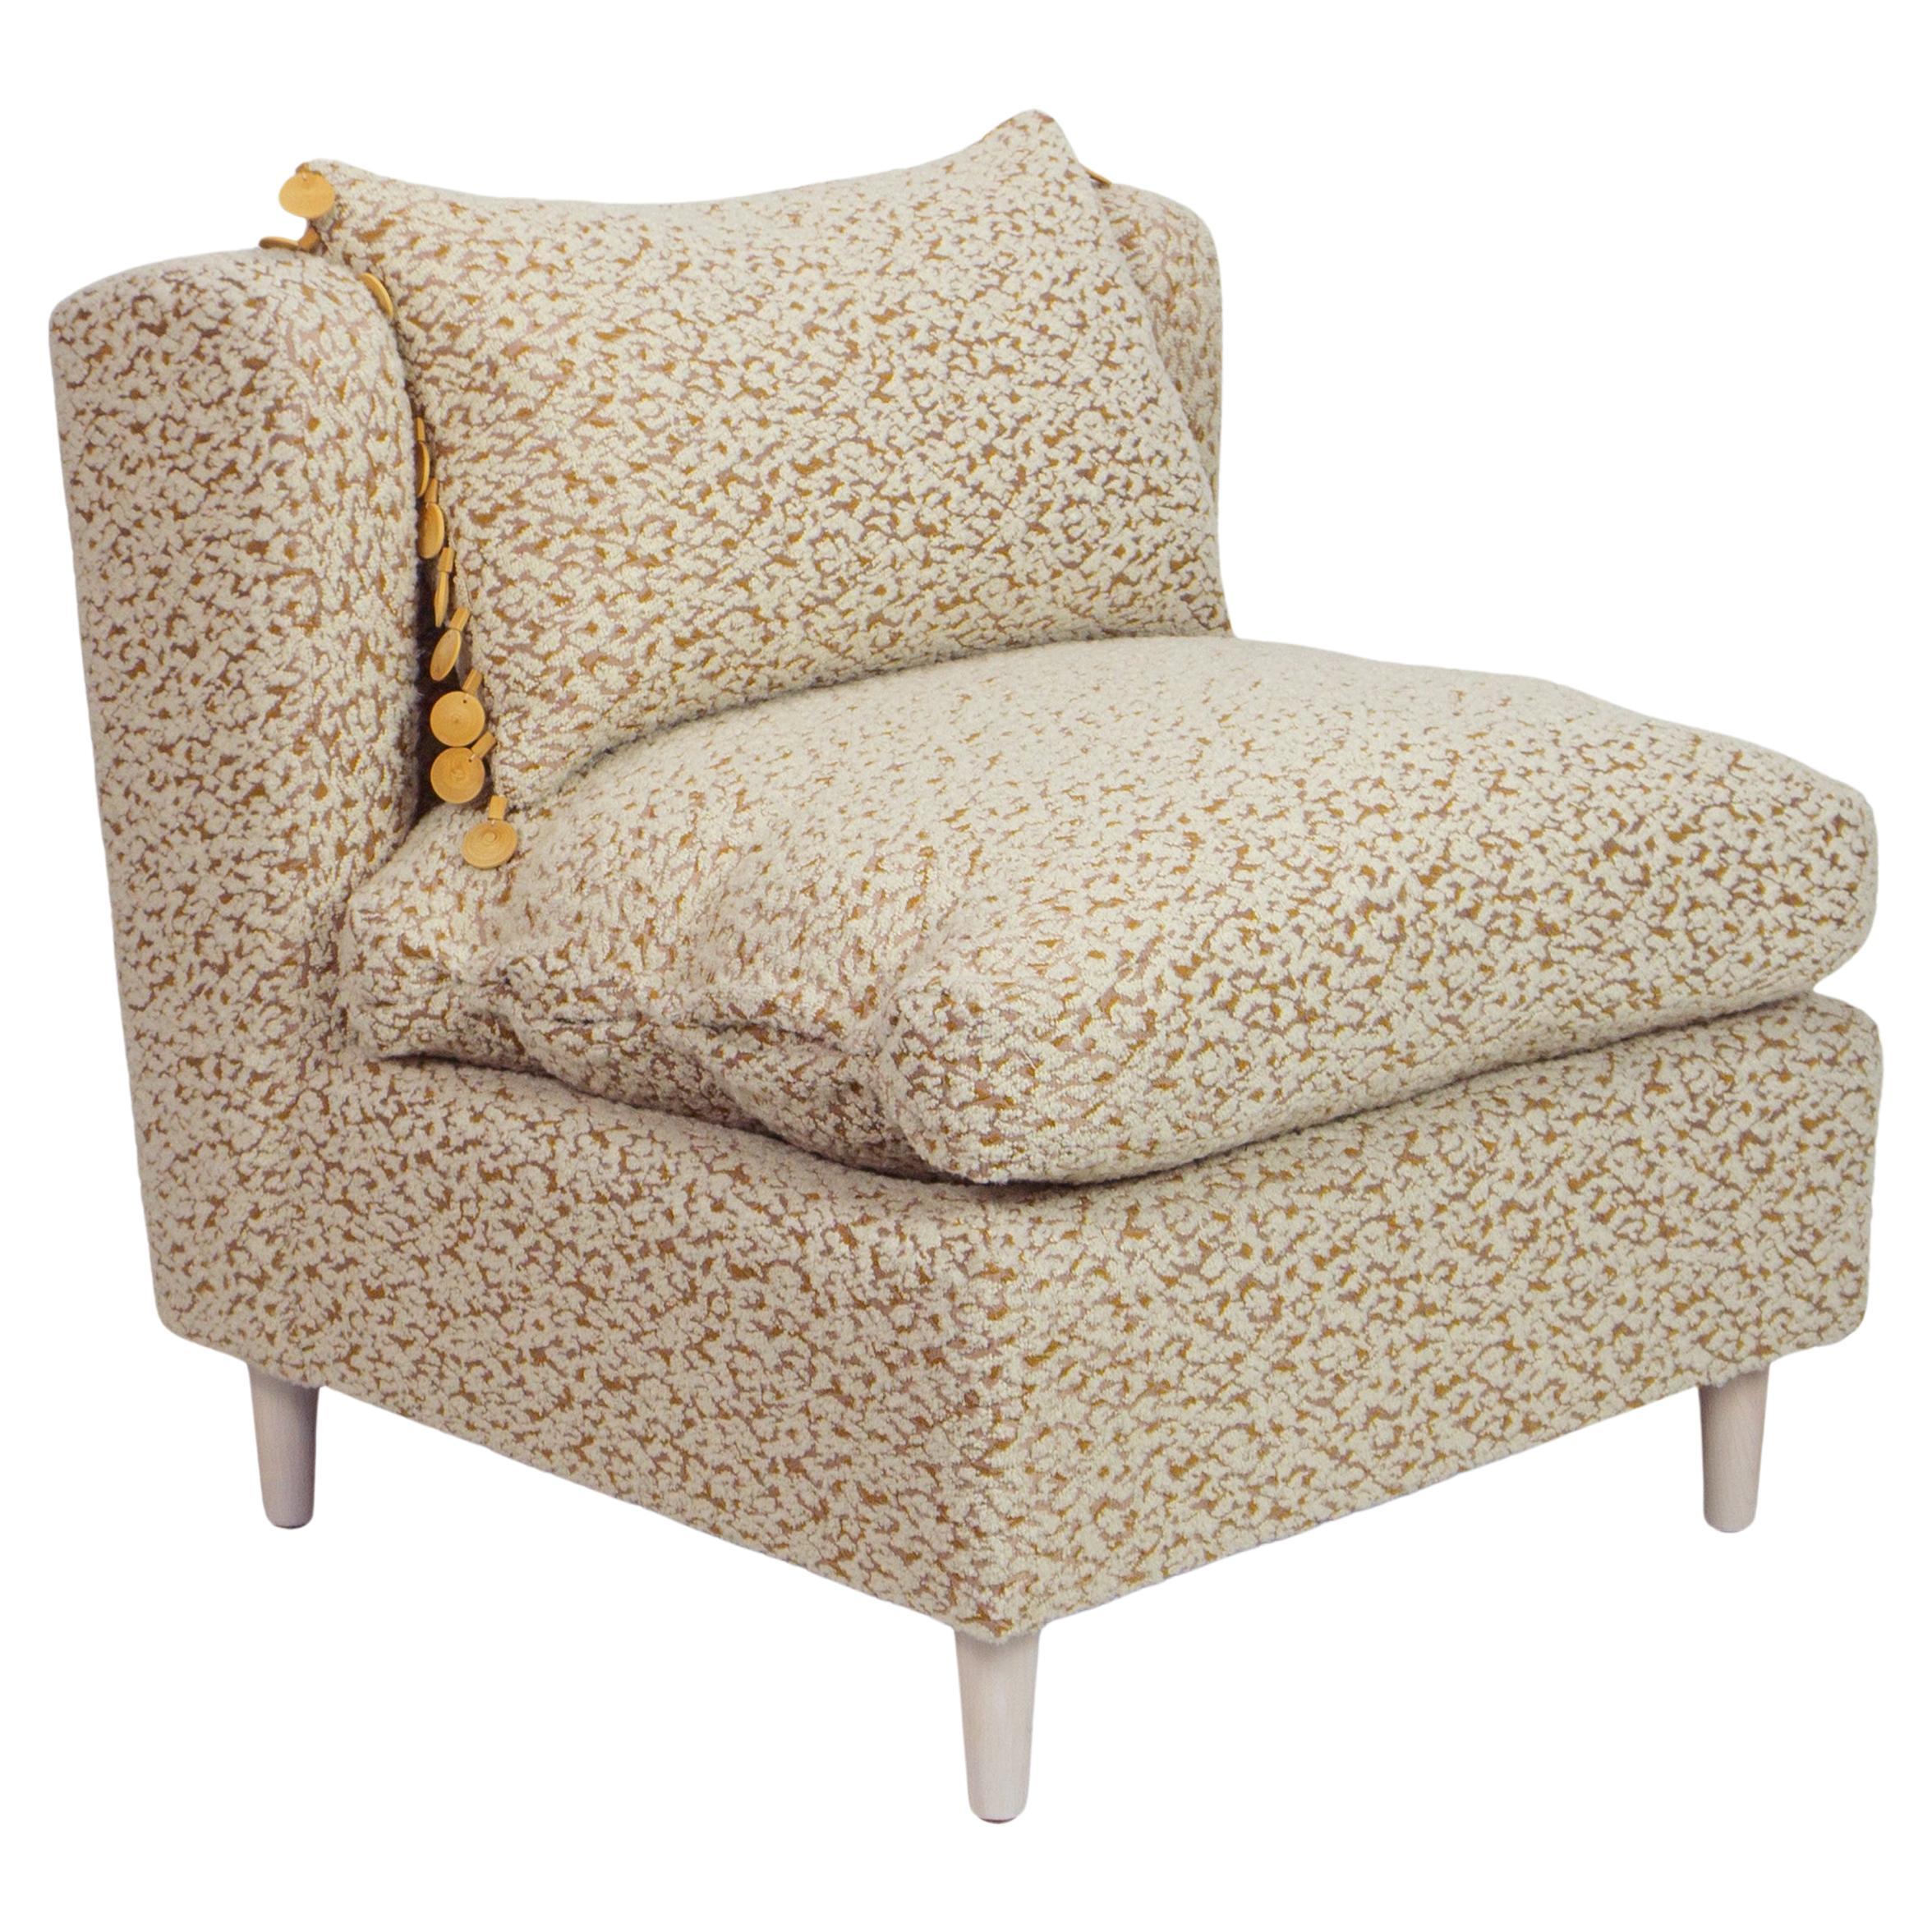 Timelessly Elegant Vintage-Inspired Armless Lounge Chair